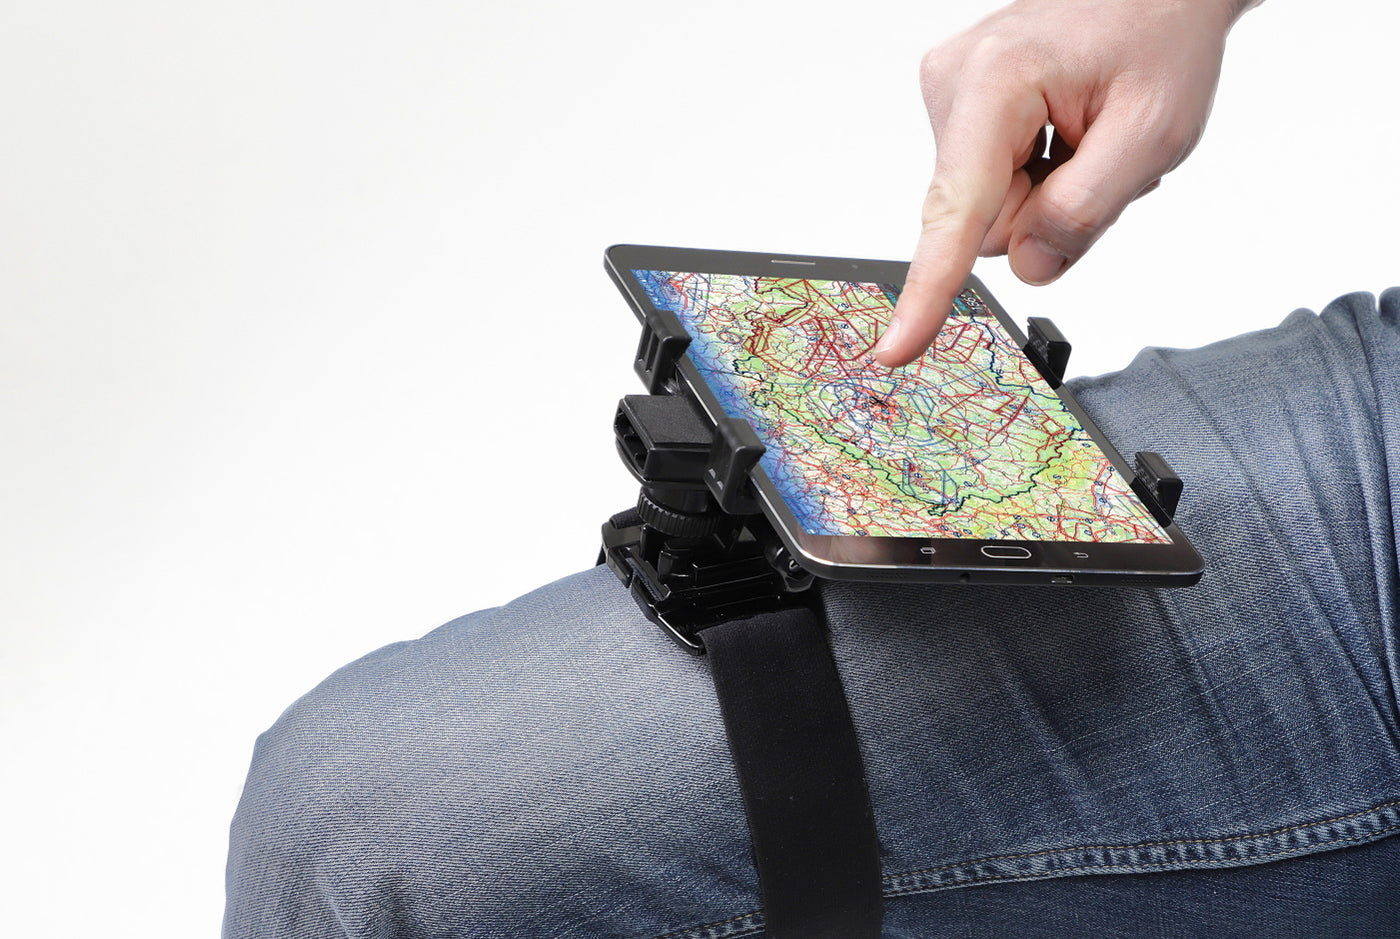 Piloten Kniebrett für iPhone, iPad, Android Smartphones, Tablets